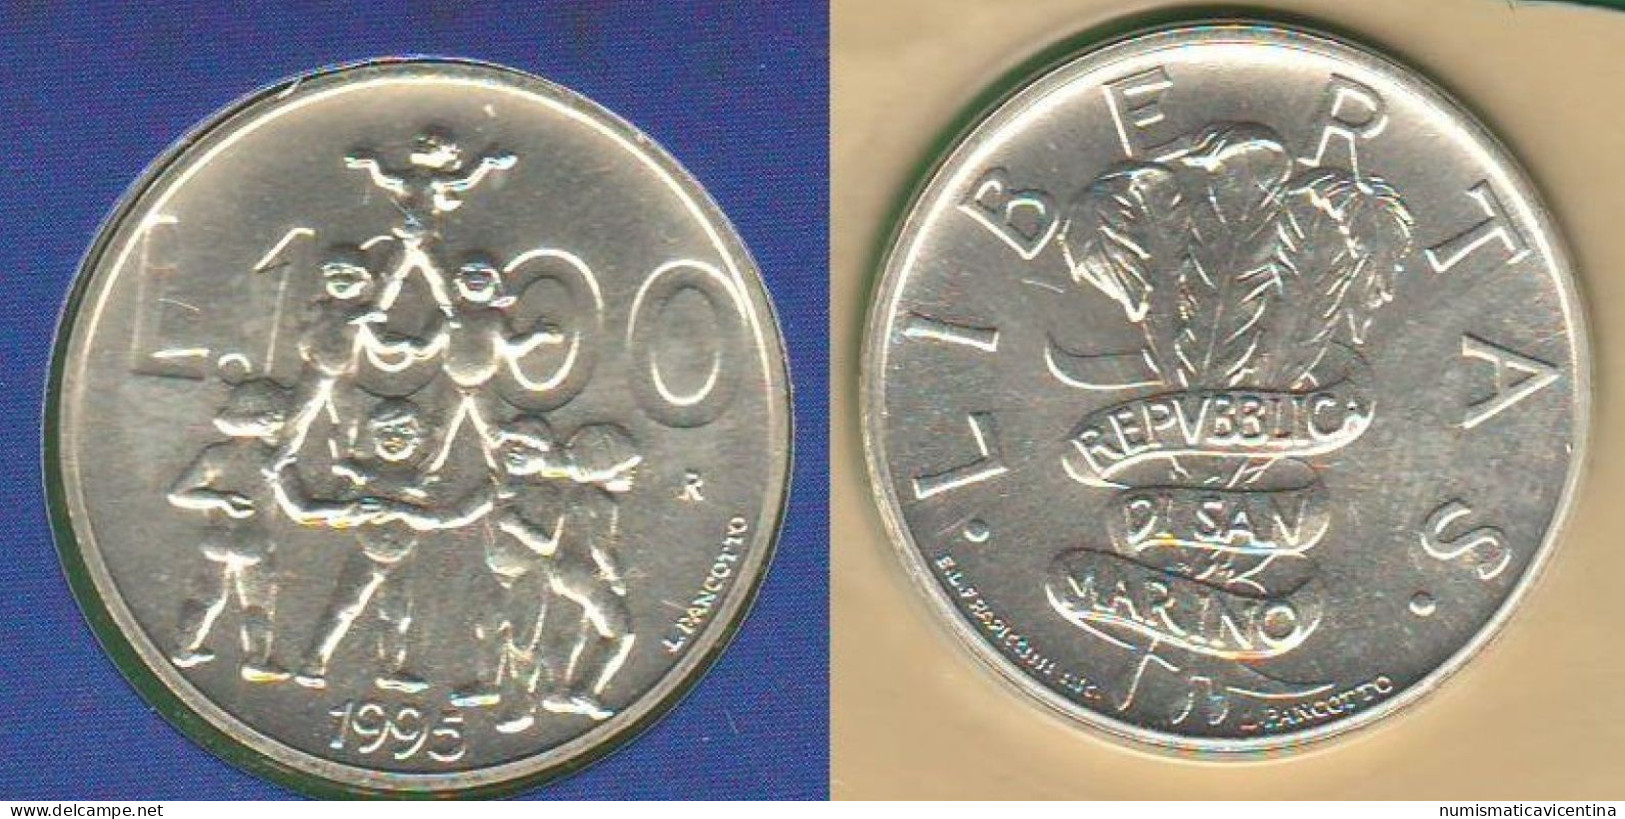 San Marino 1000 Lire 1995 Solidarietà Solidarity Solidarité Saint Marin Silver Coin UNC - San Marino